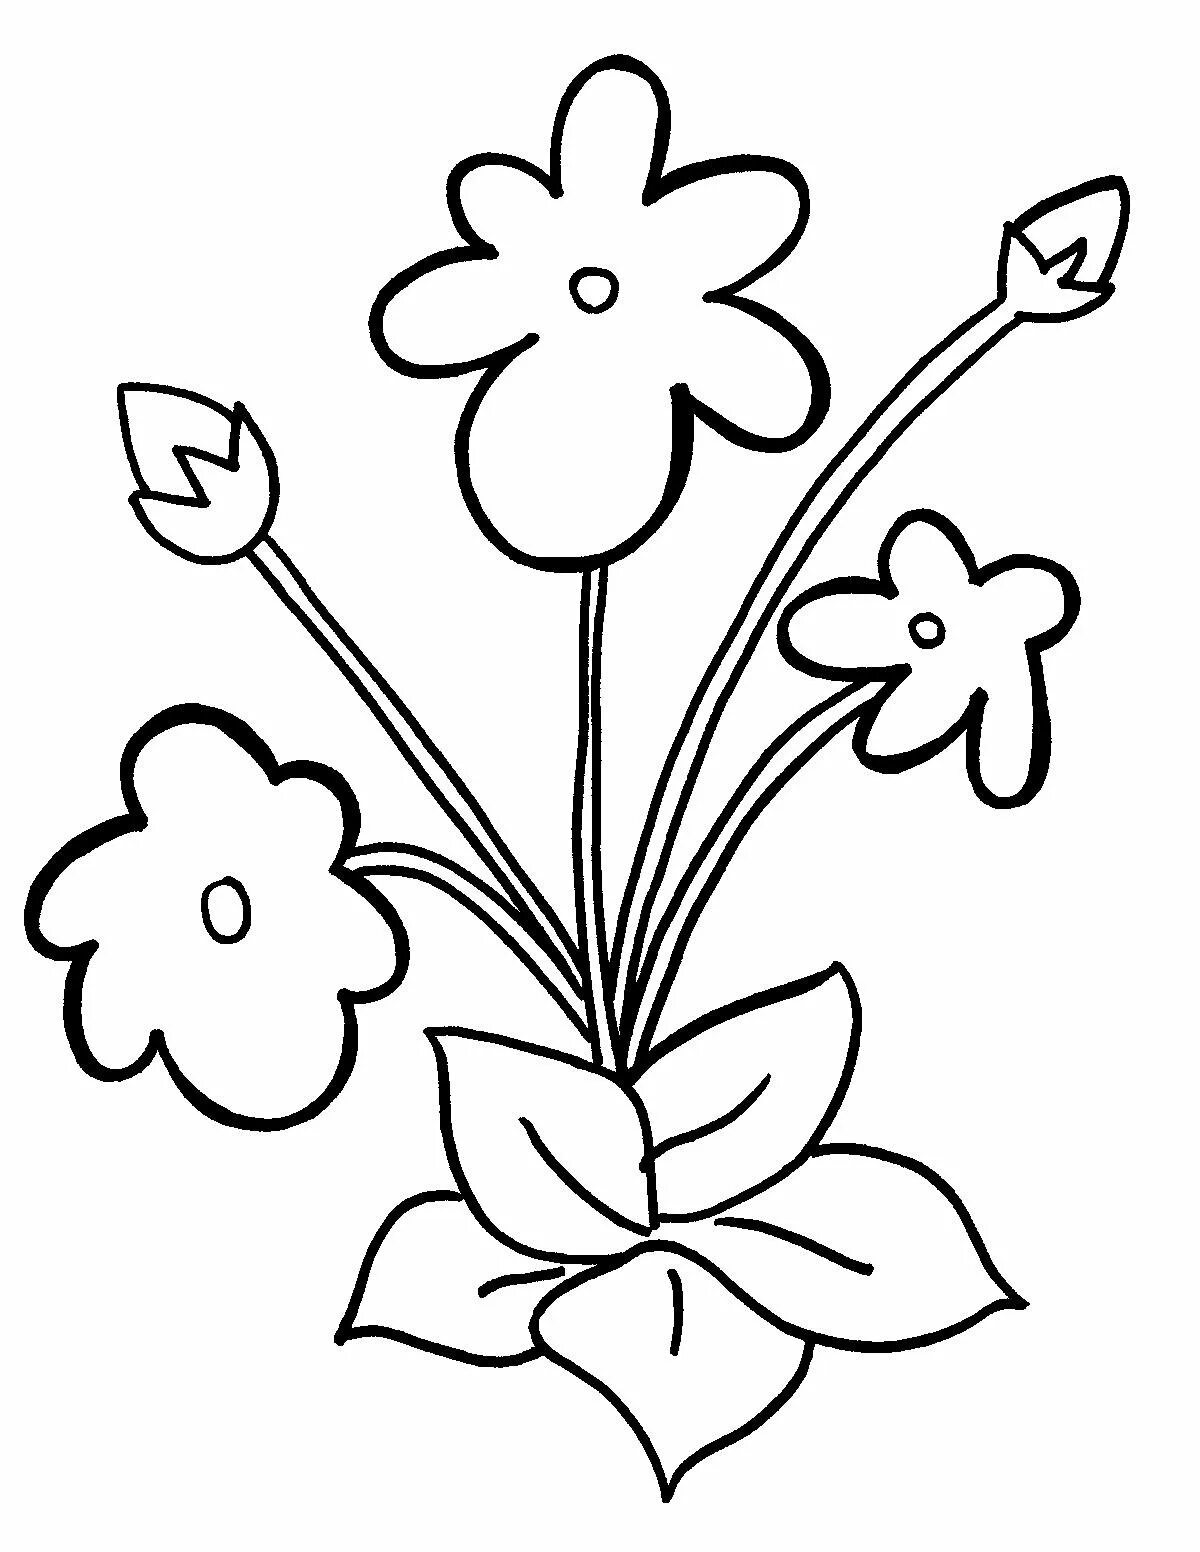 Раскраска 3 цветочка. Узамбарская фиалка раскраска. Цветы. Раскраска для малышей. Раскраска цветочек. Раскраска цветок фиалка.